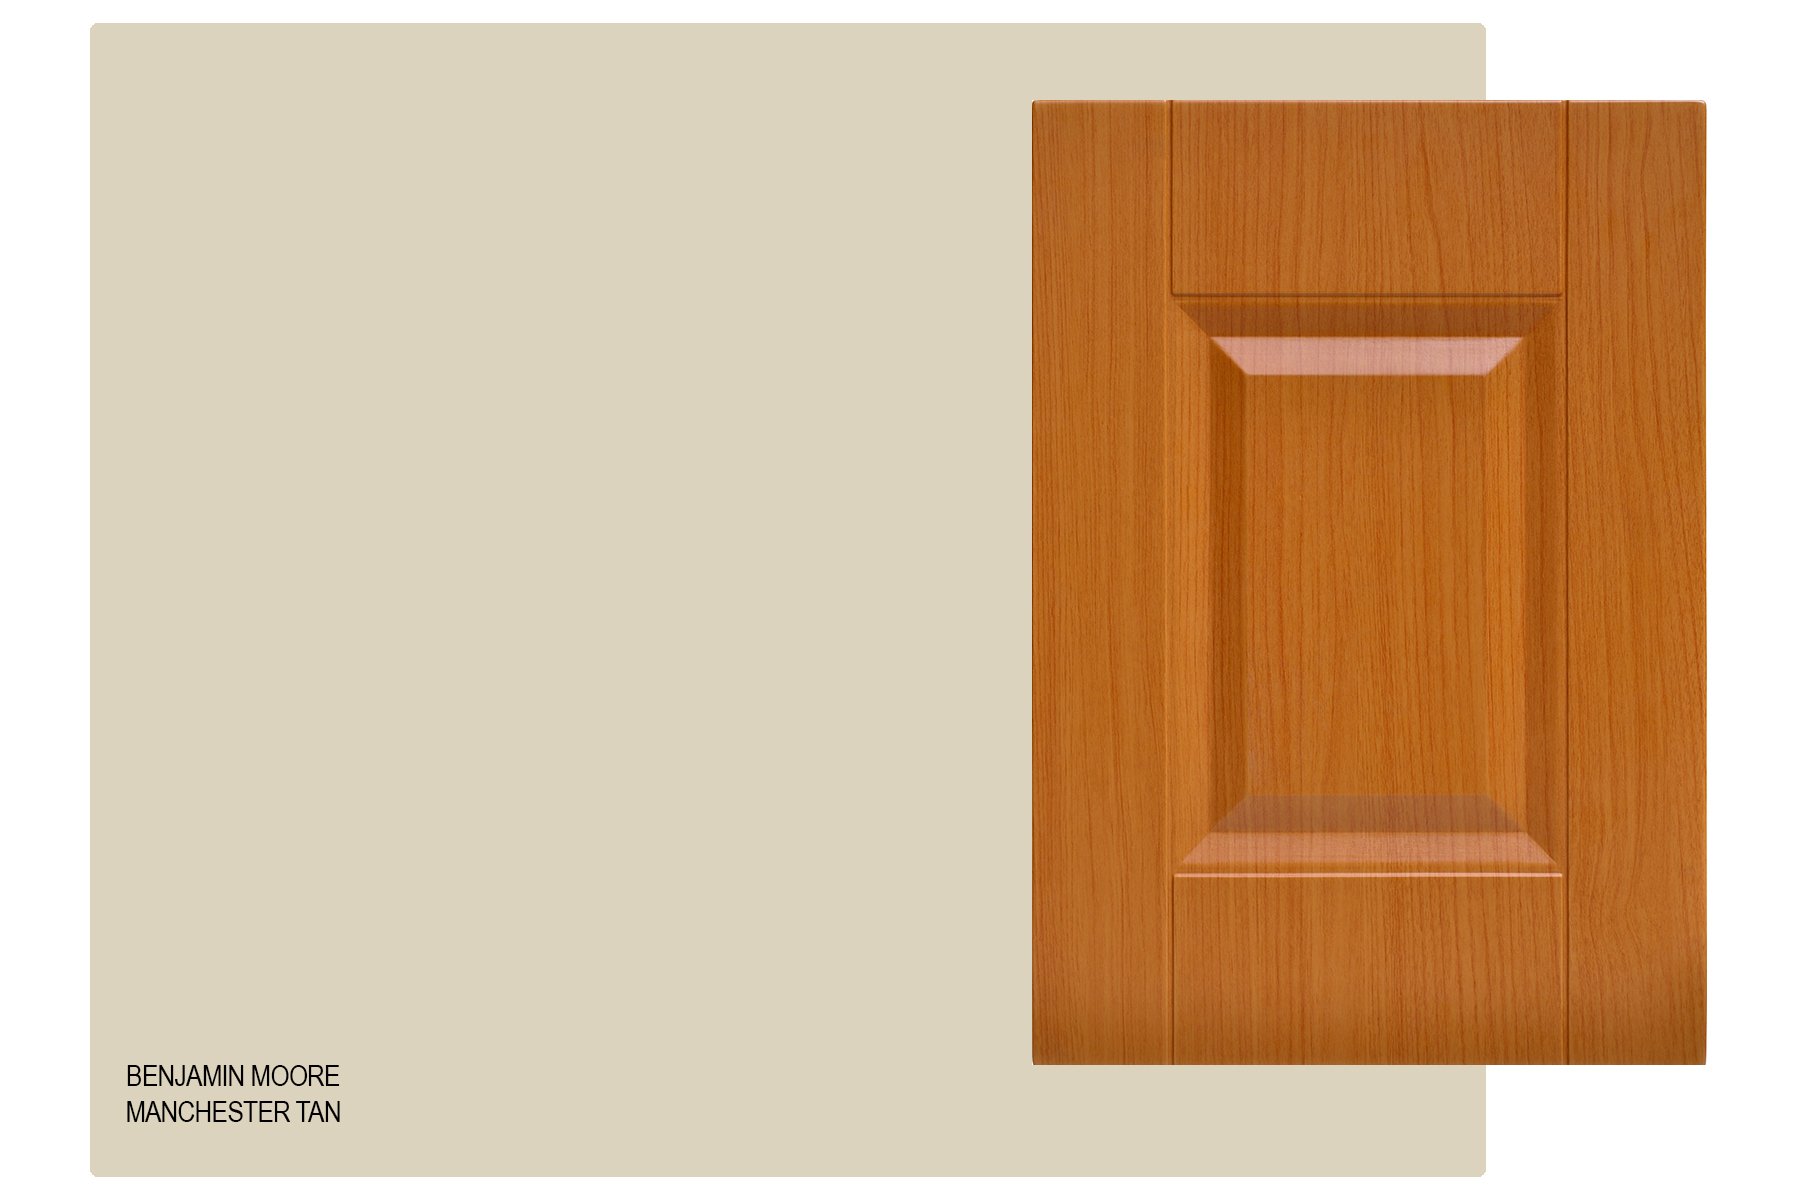 benjamin moore manchester tan compared to a honey oak cabinet door